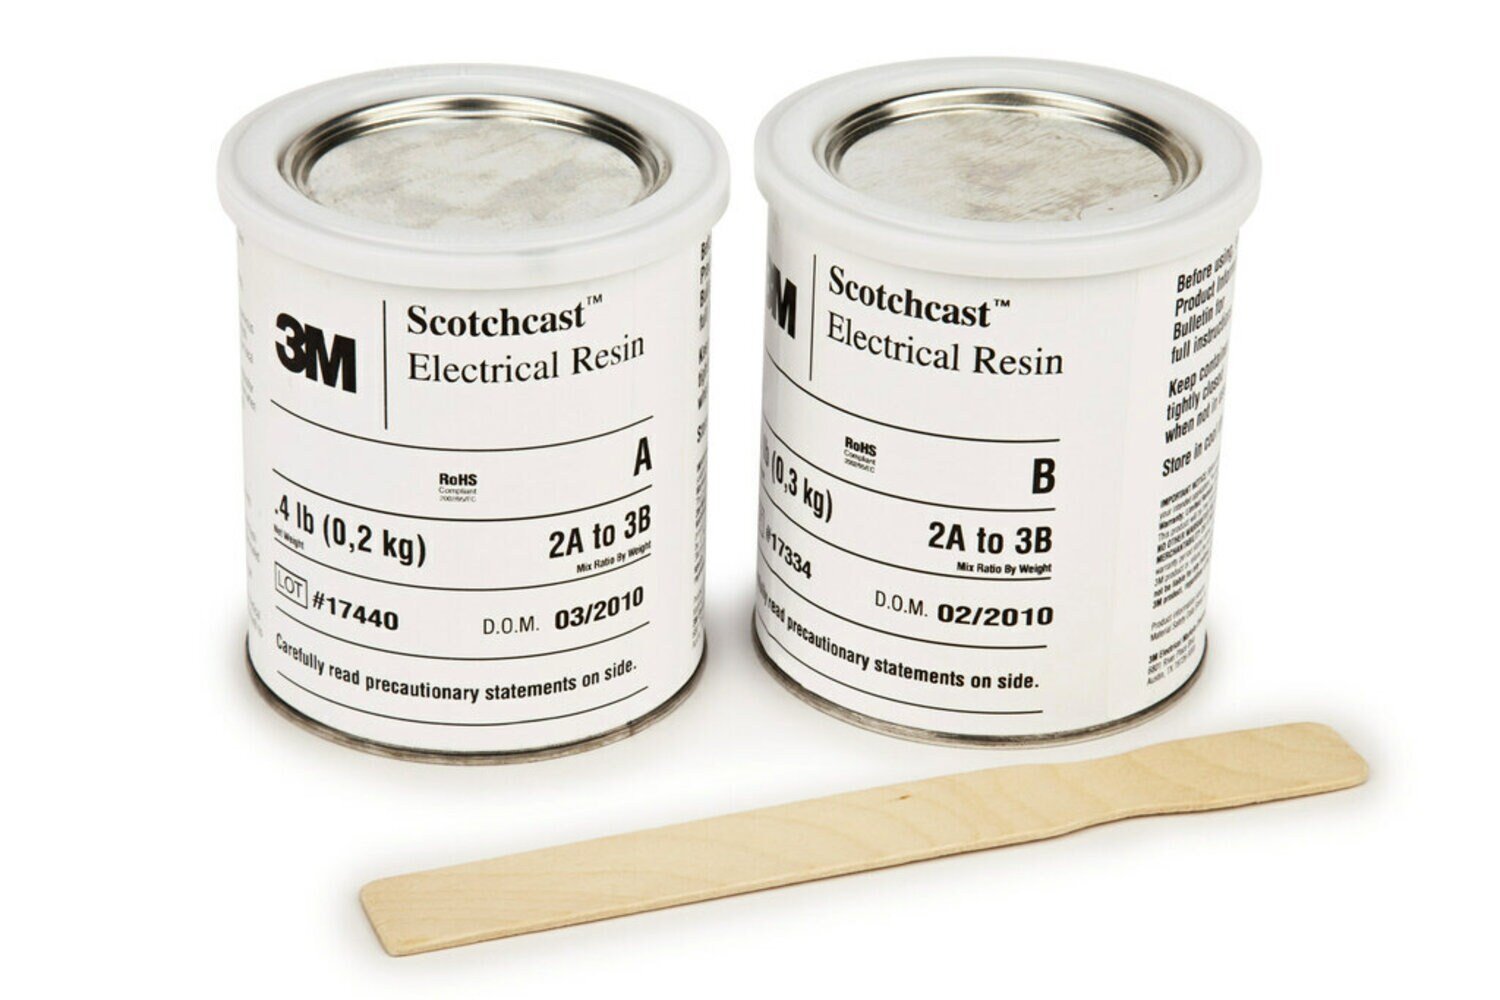 7010399120 - 3M Scotchcast Electrical Resin MR283FO75 (15 lb), 1 Kits/Case